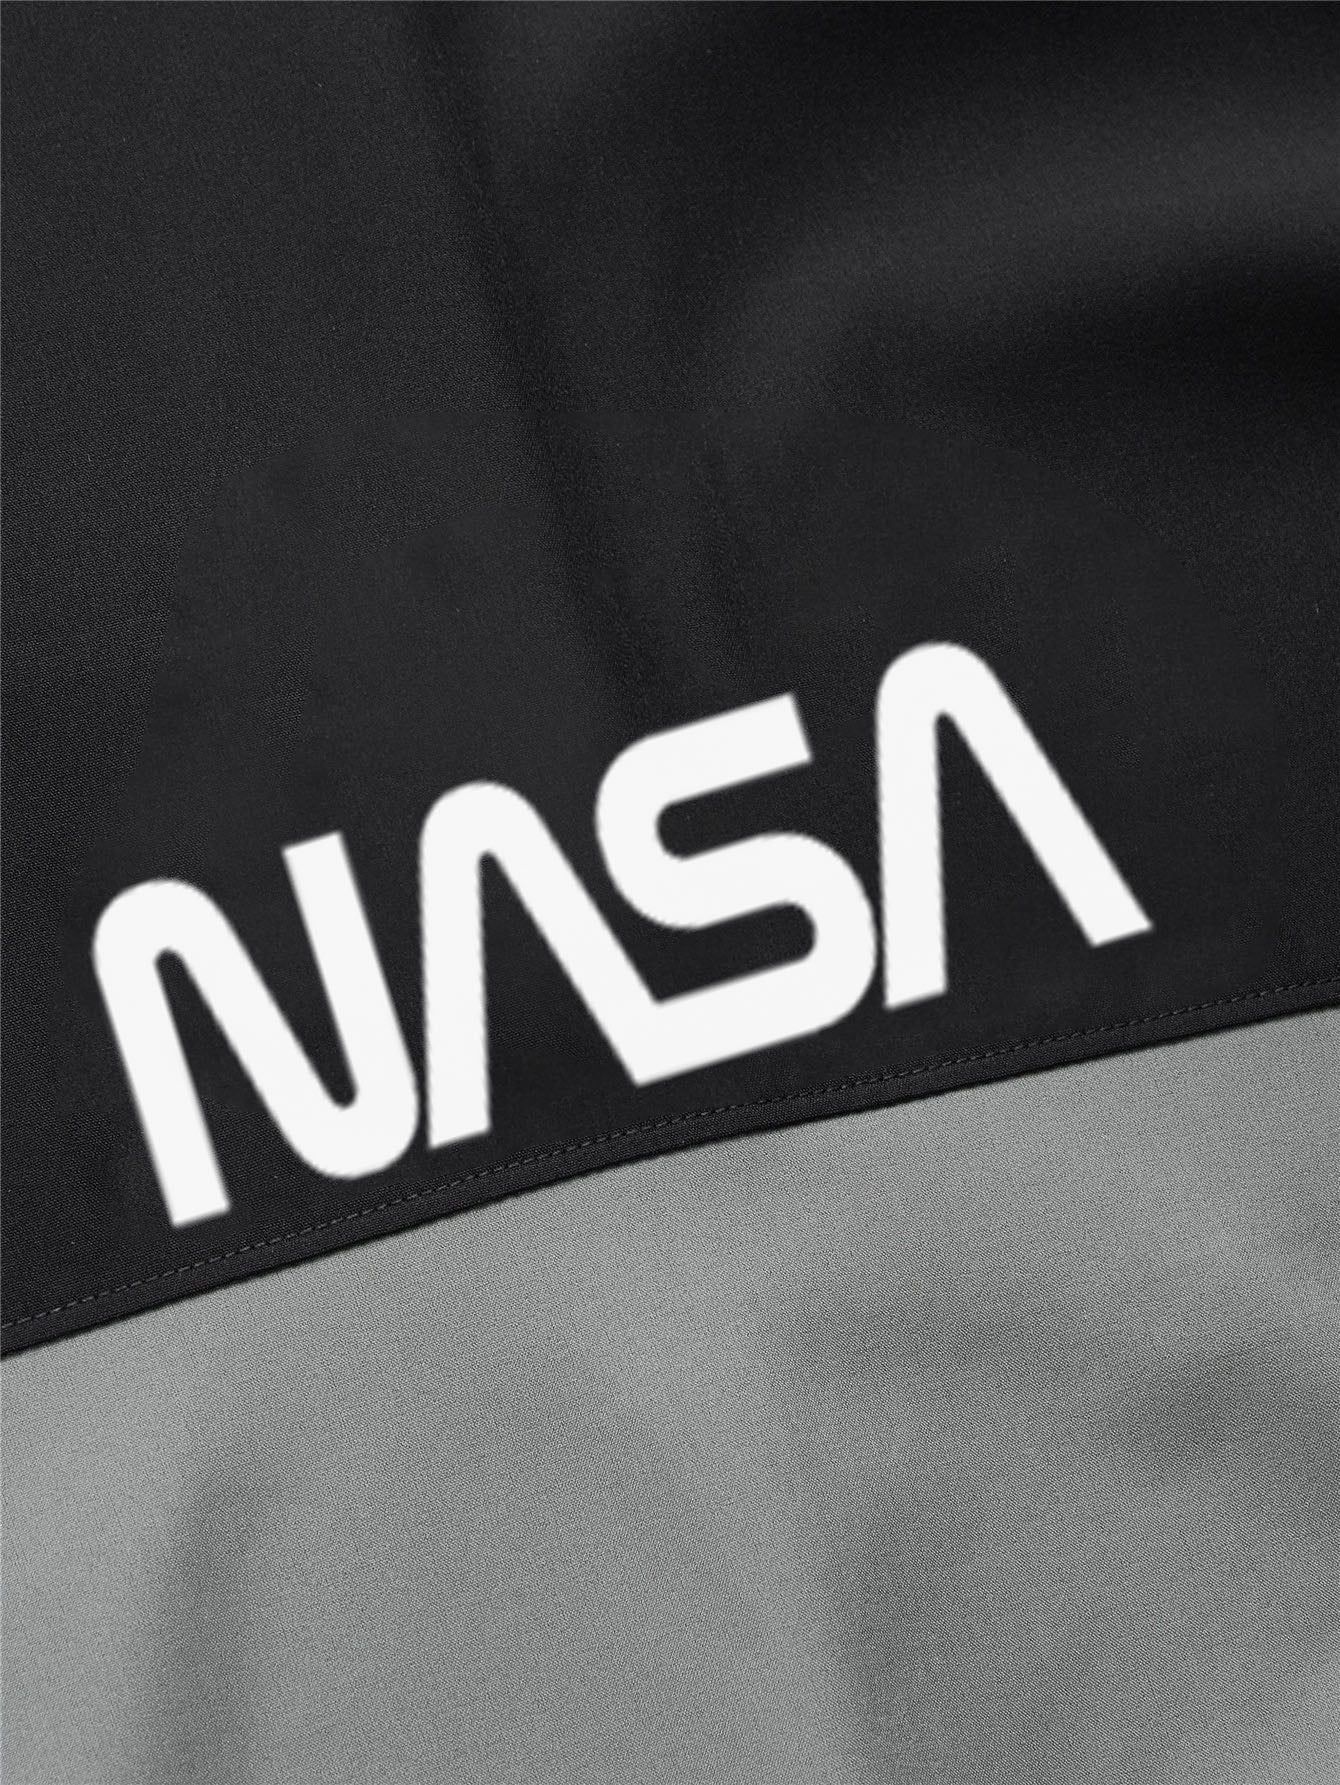 SHEIN NASA Two-Tone Graphic Drawstring Hoodie with Raglan Sleeves - Negative Apparel